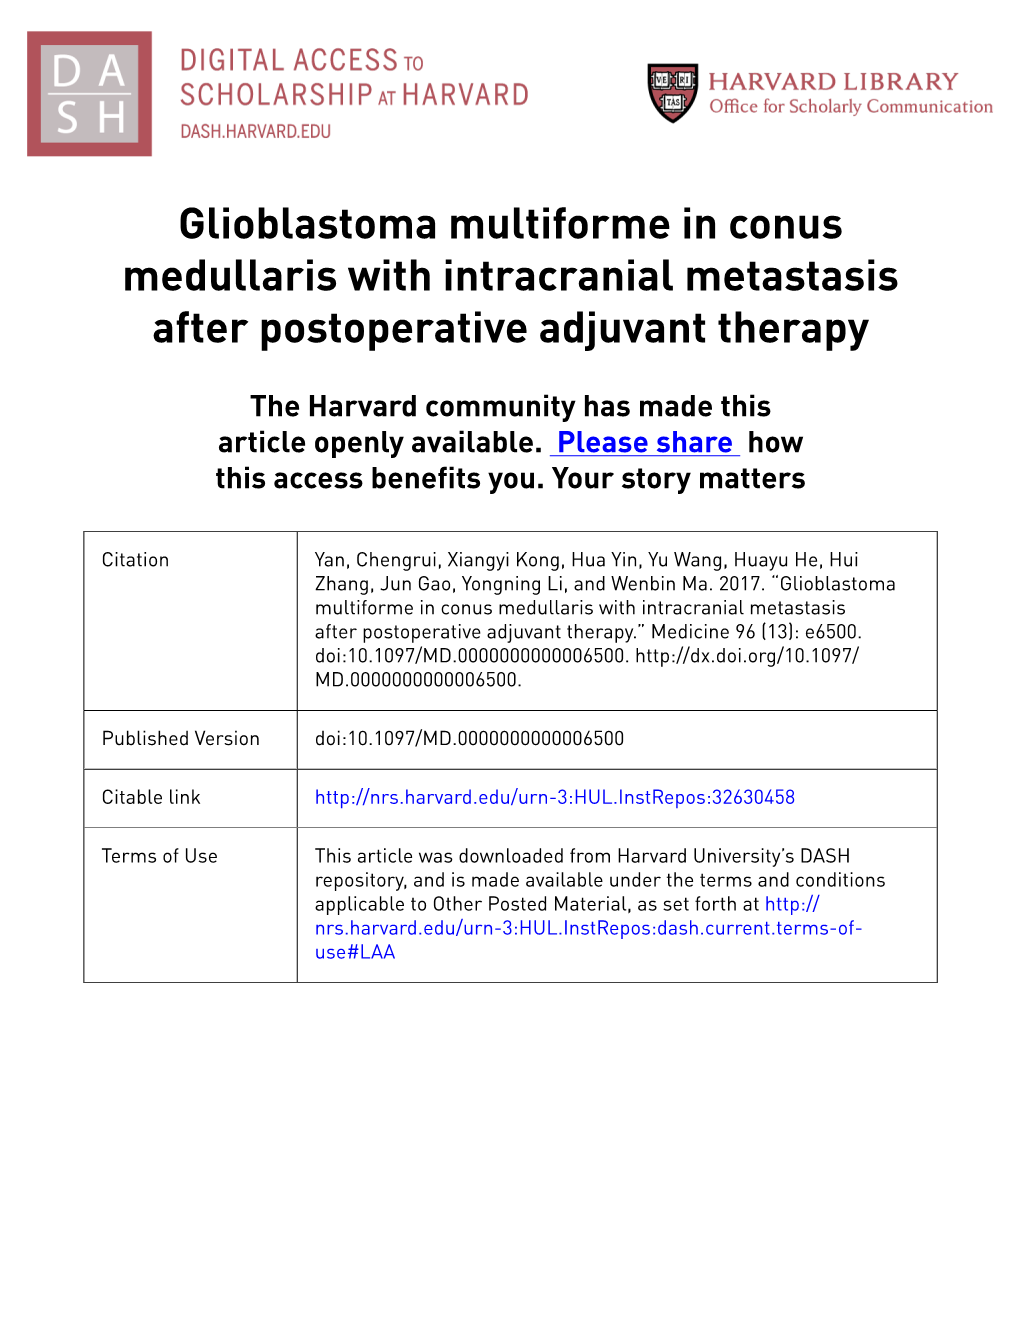 Glioblastoma Multiforme in Conus Medullaris with Intracranial Metastasis After Postoperative Adjuvant Therapy